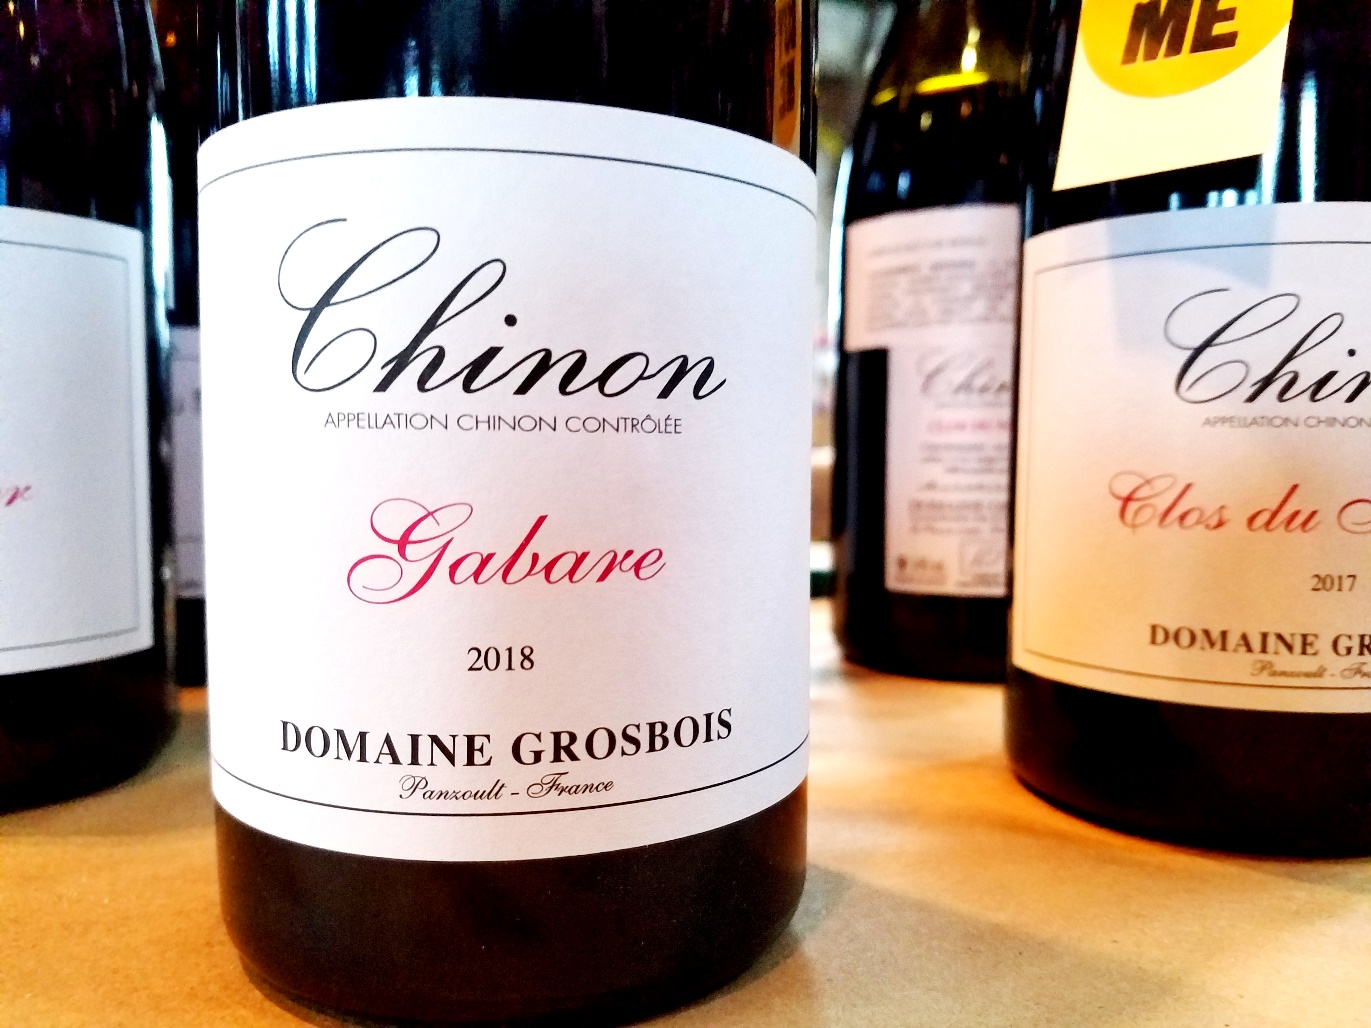 Domaine Grosbois, Gabare Chinon 2018, Loire, France, Wine Casual